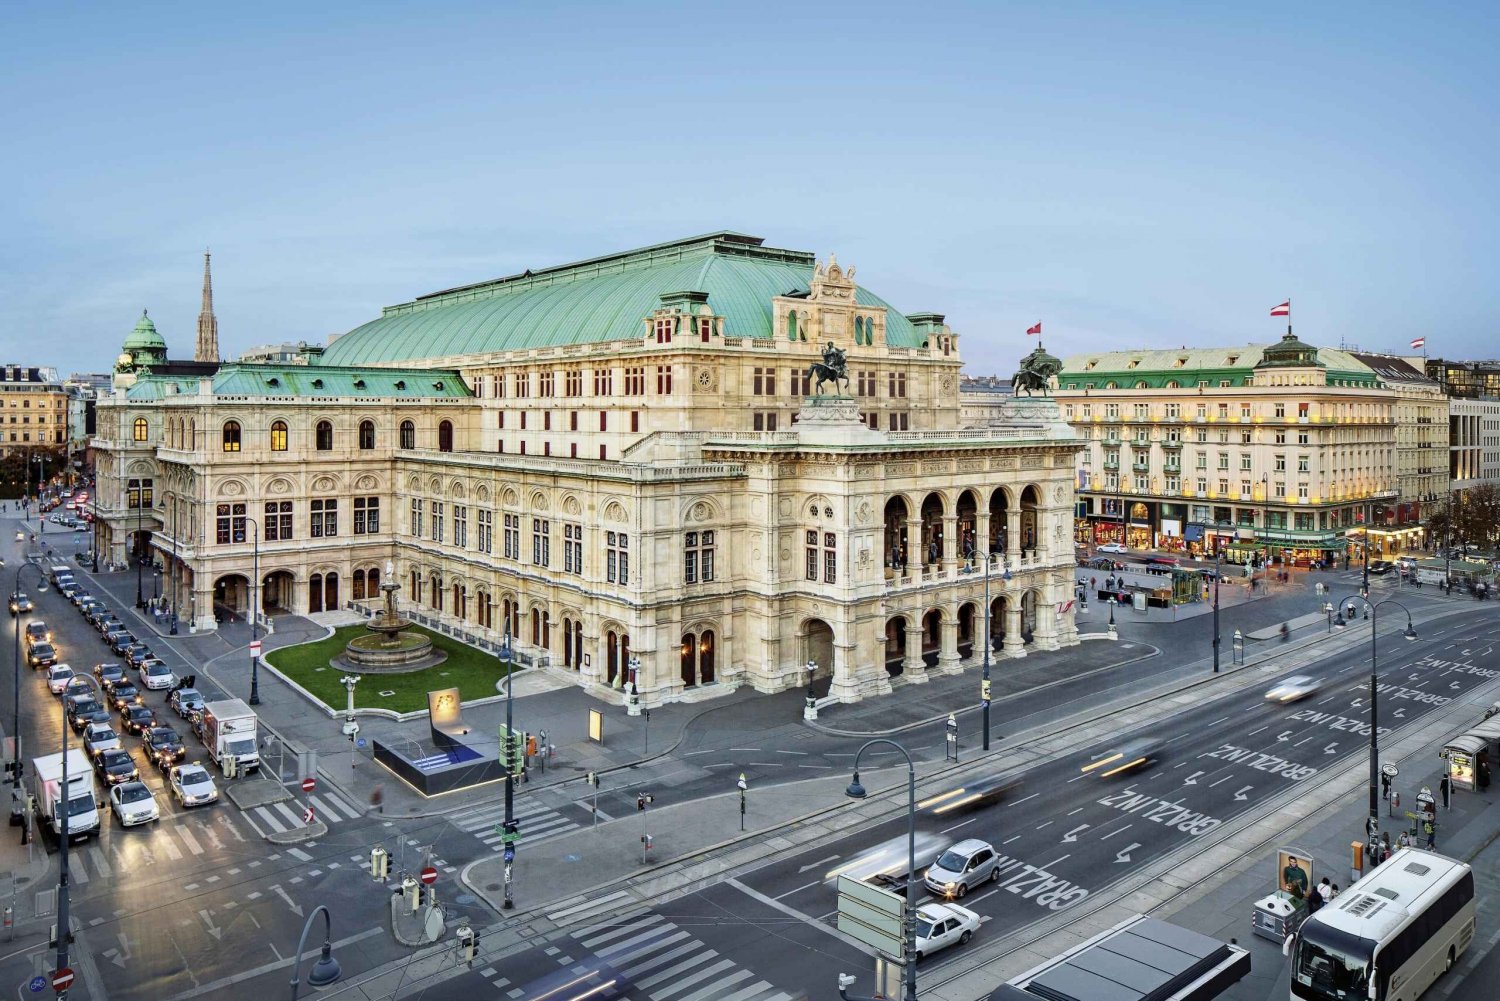 Wien: Historisk byvandring med høydepunkter